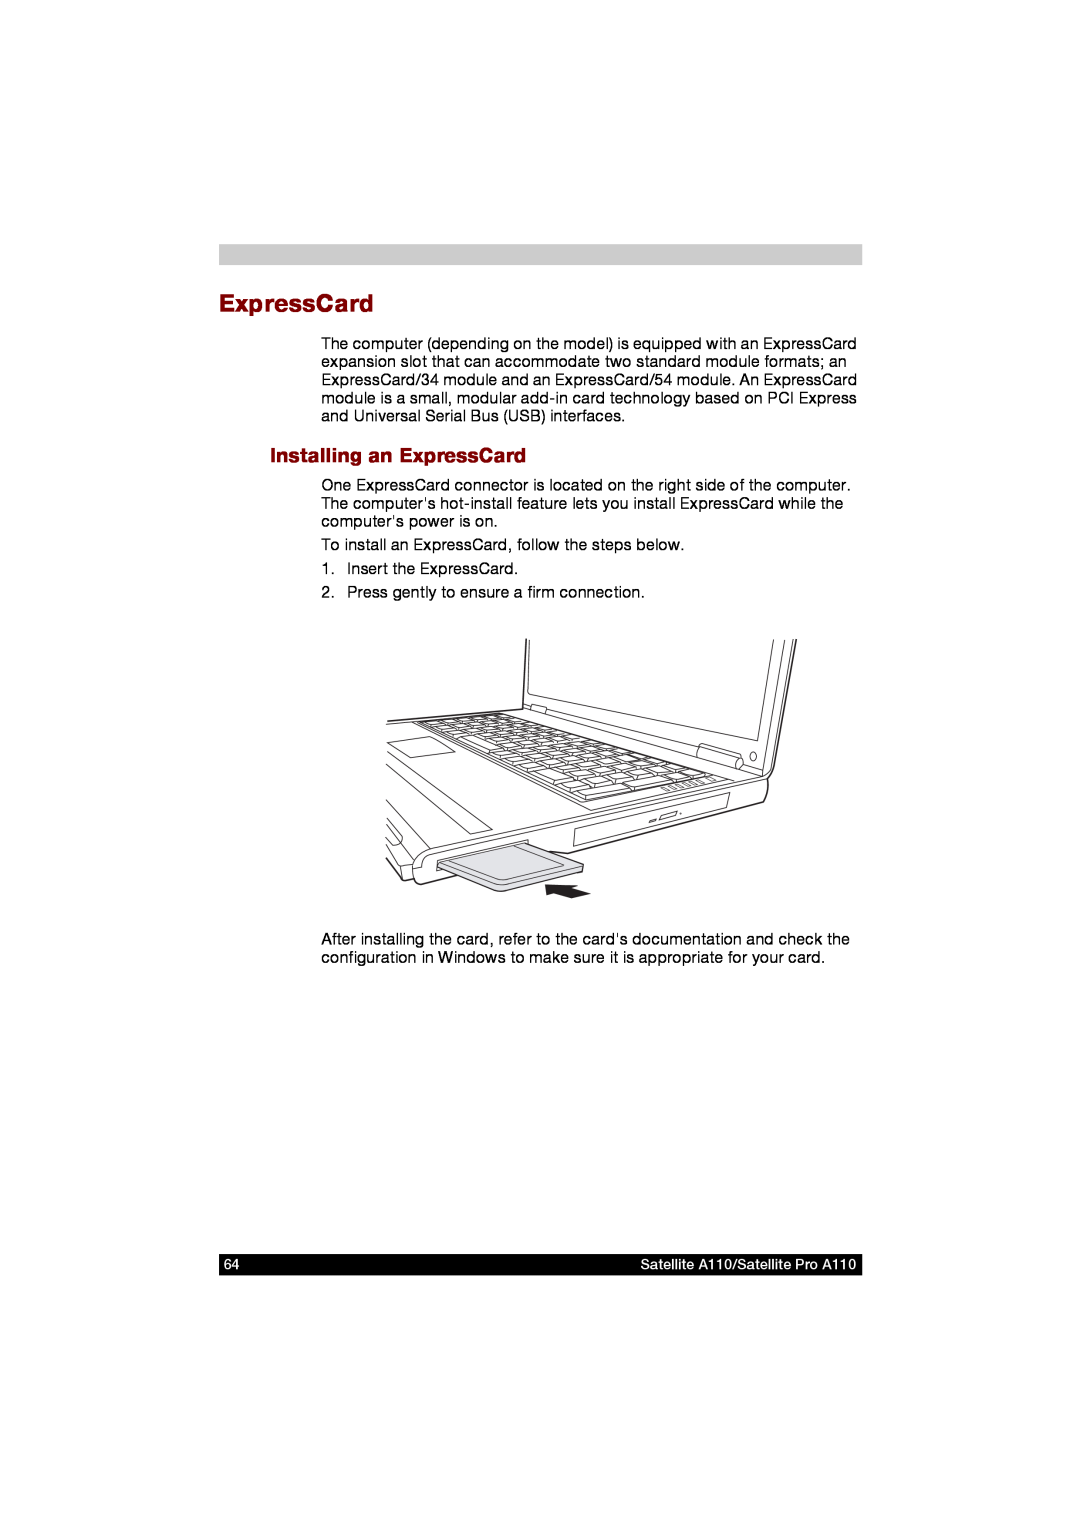 Toshiba A110 user manual Installing an ExpressCard 